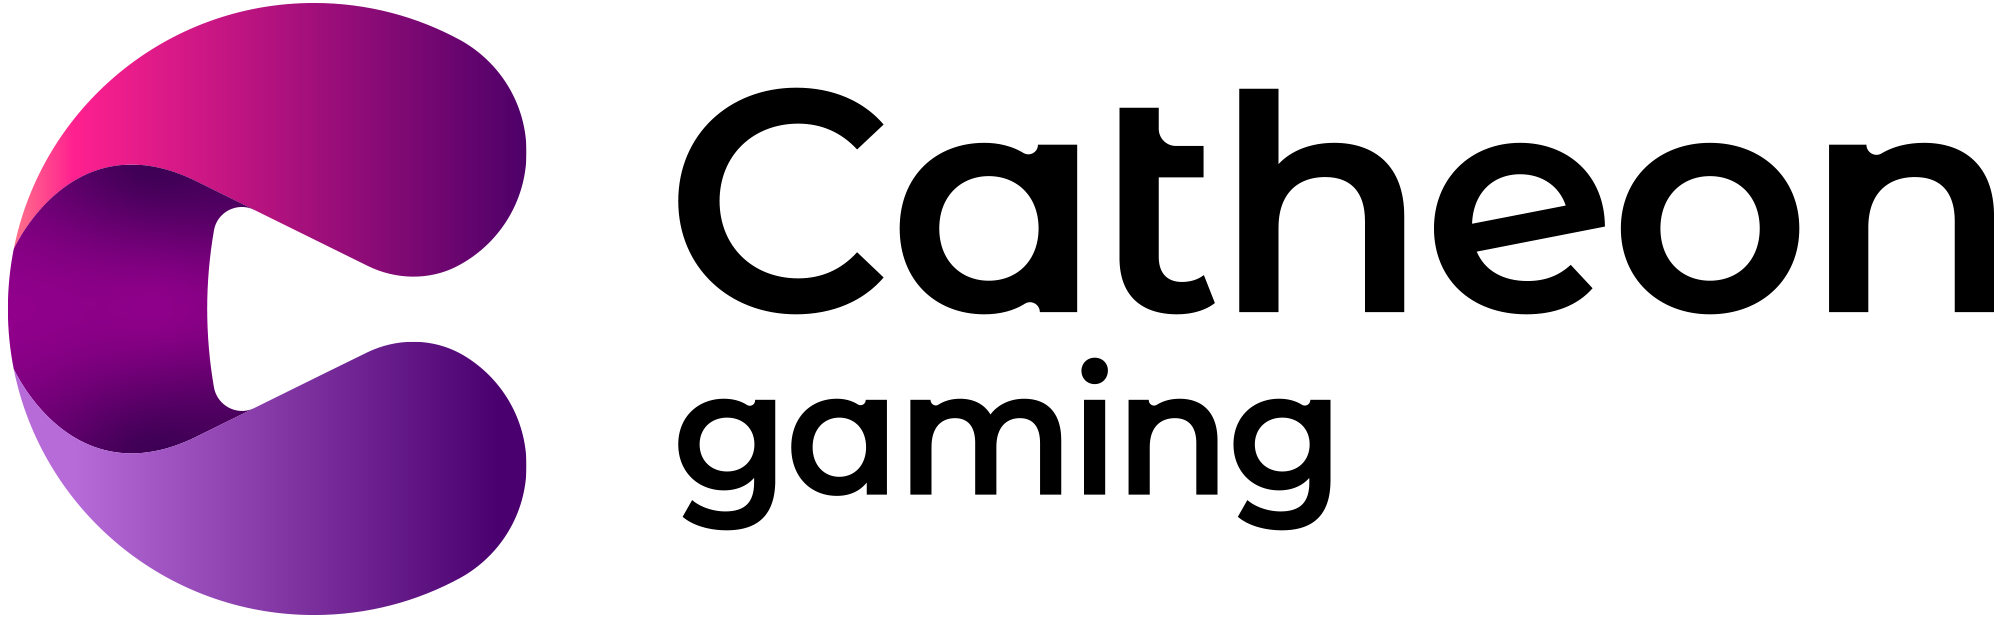 catheon logo3